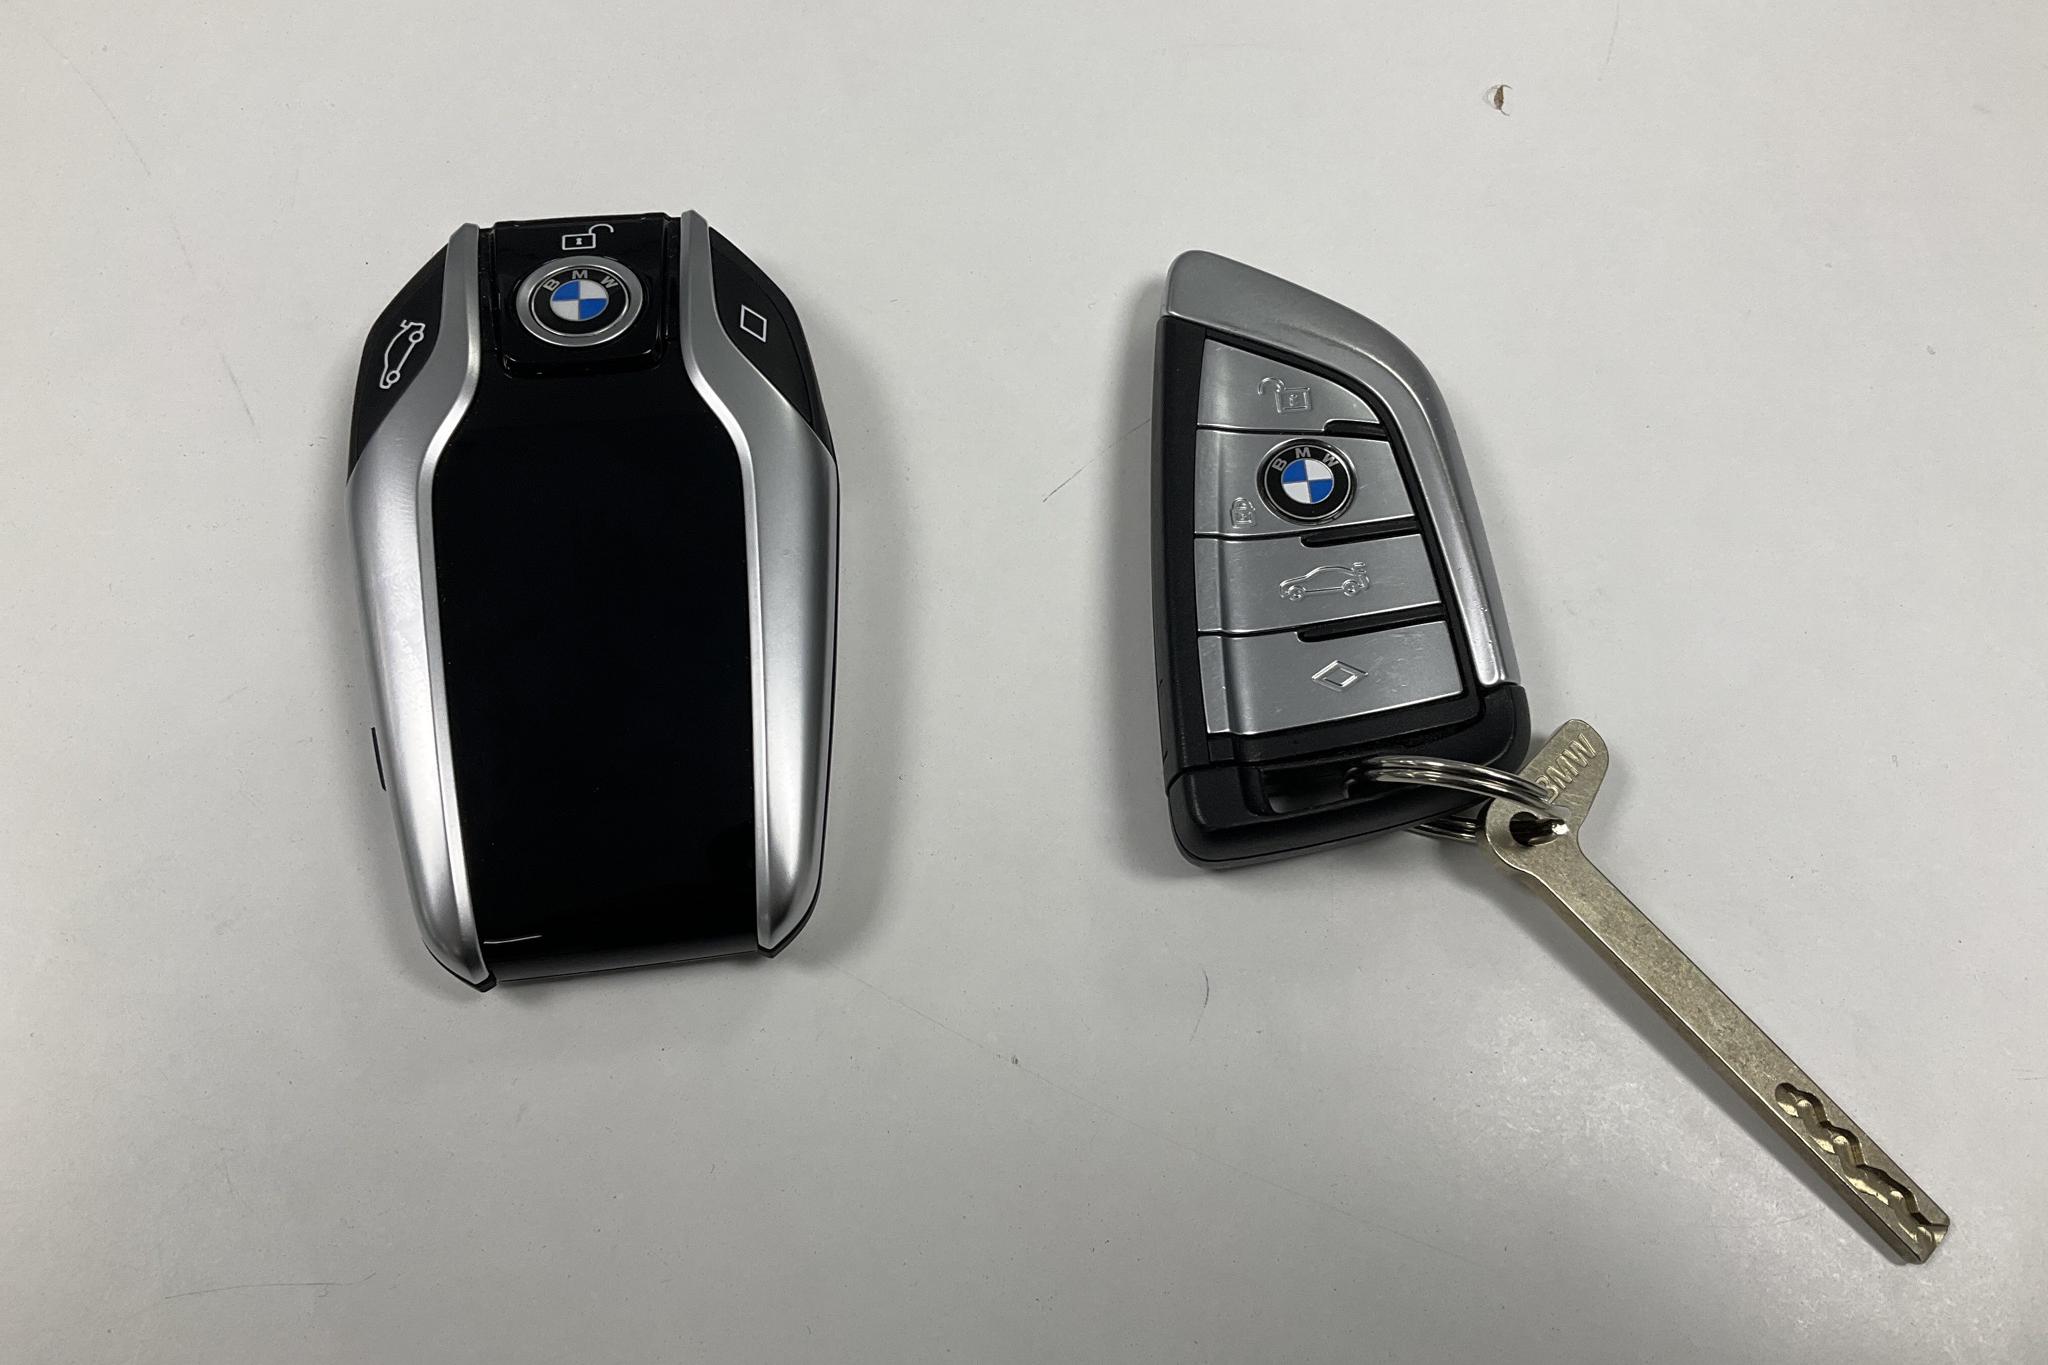 BMW 530d xDrive Touring, G31 (265hk) - 11 649 mil - Automat - Dark Blue - 2018